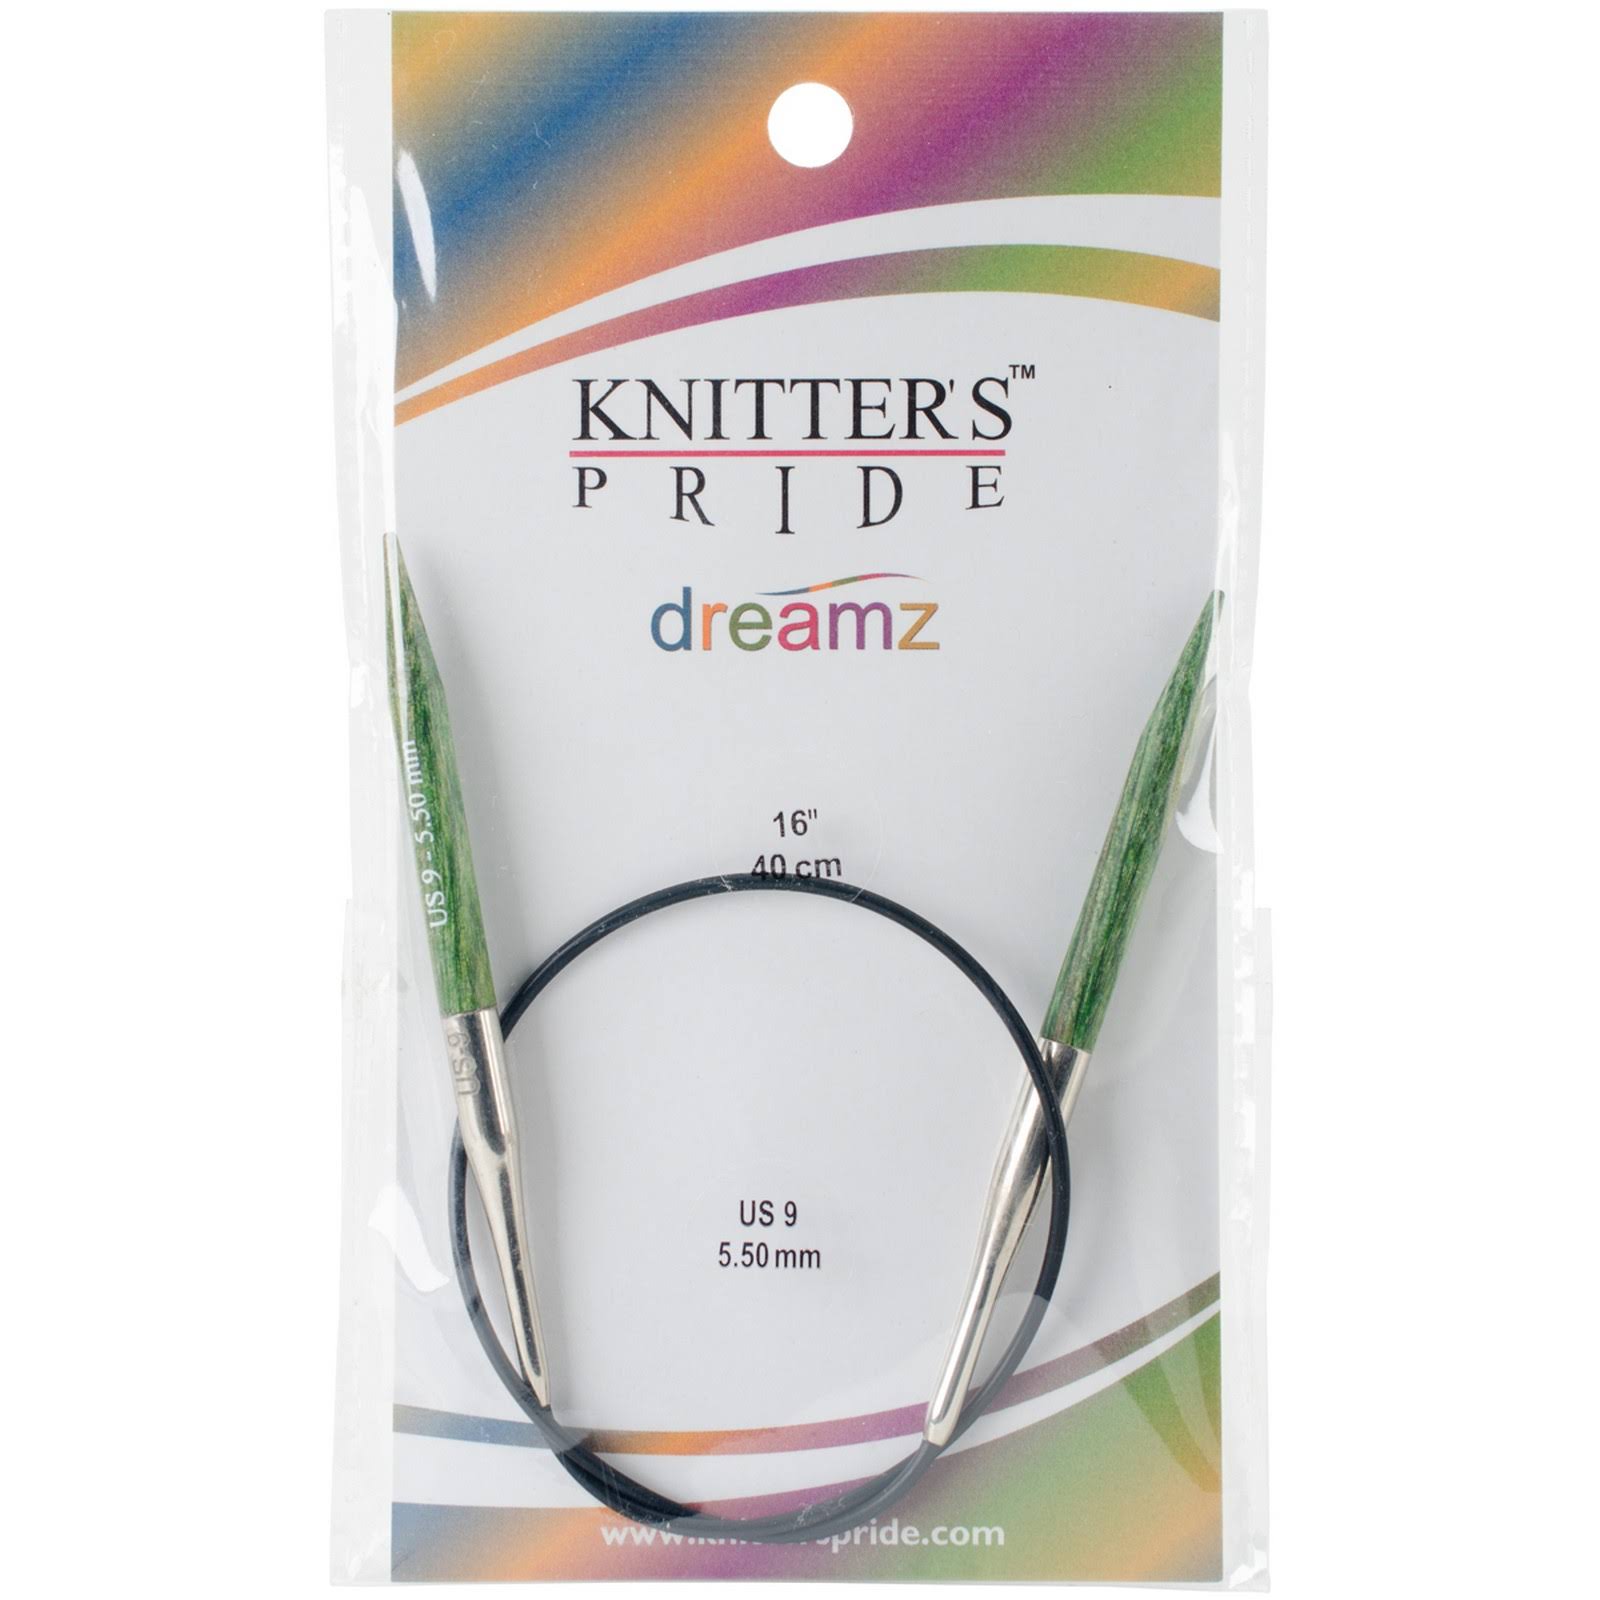 Knitters Pride Dreamz Circular Knitting Needles - Size 8, 24"